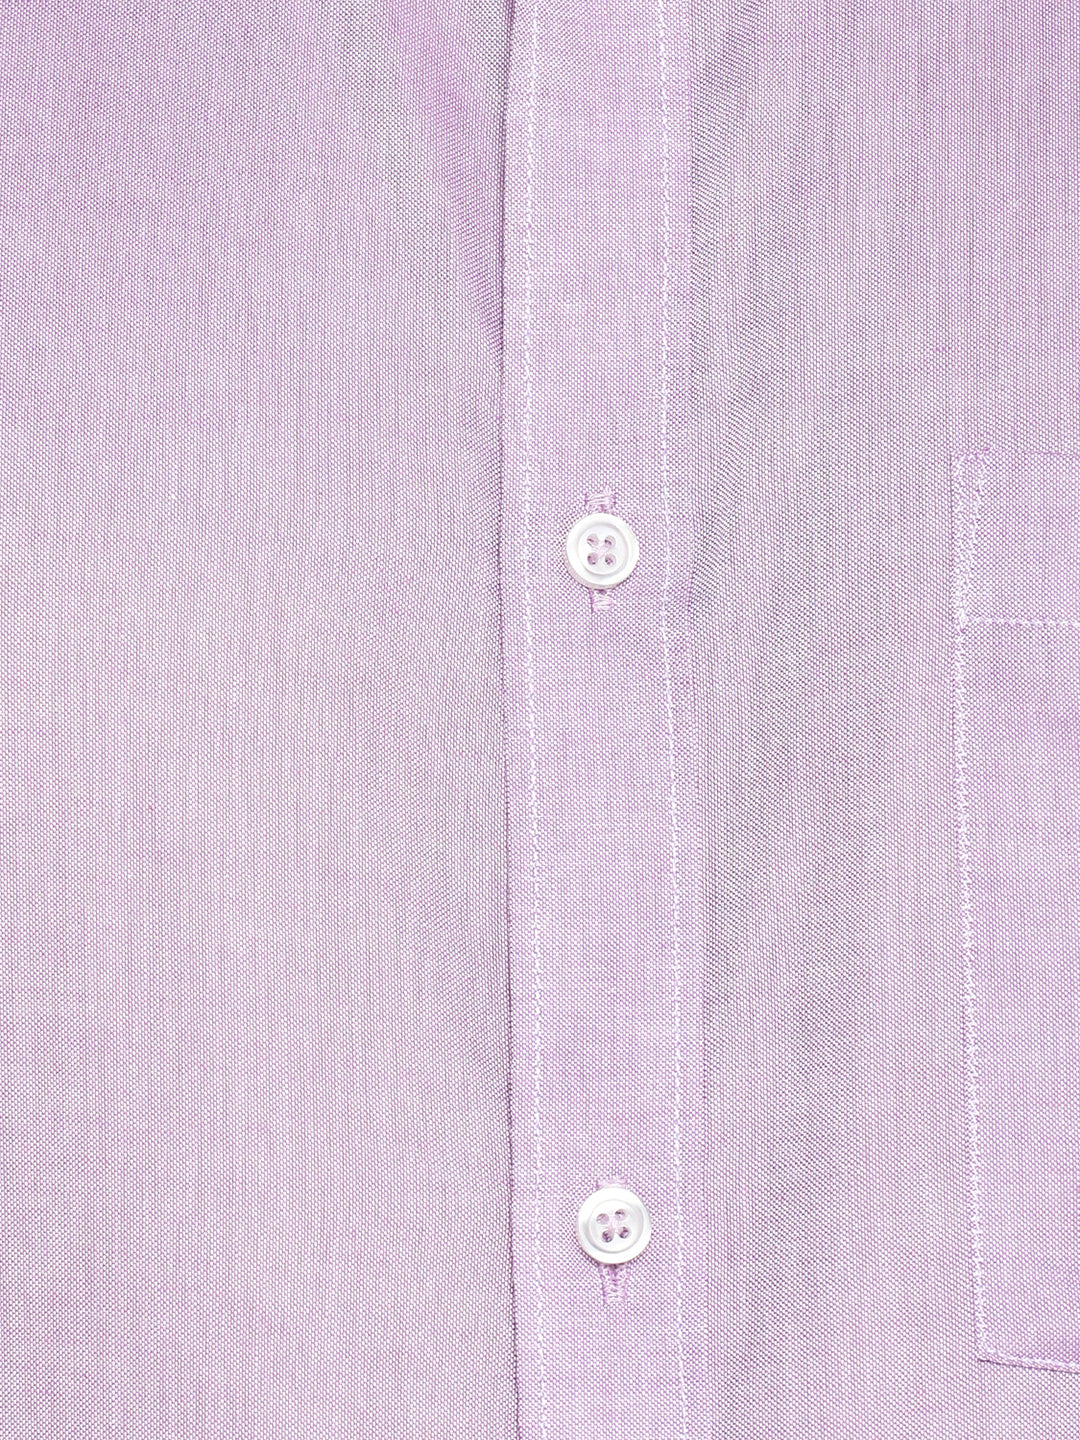 Solid Purple Regular Fit Formal Shirt